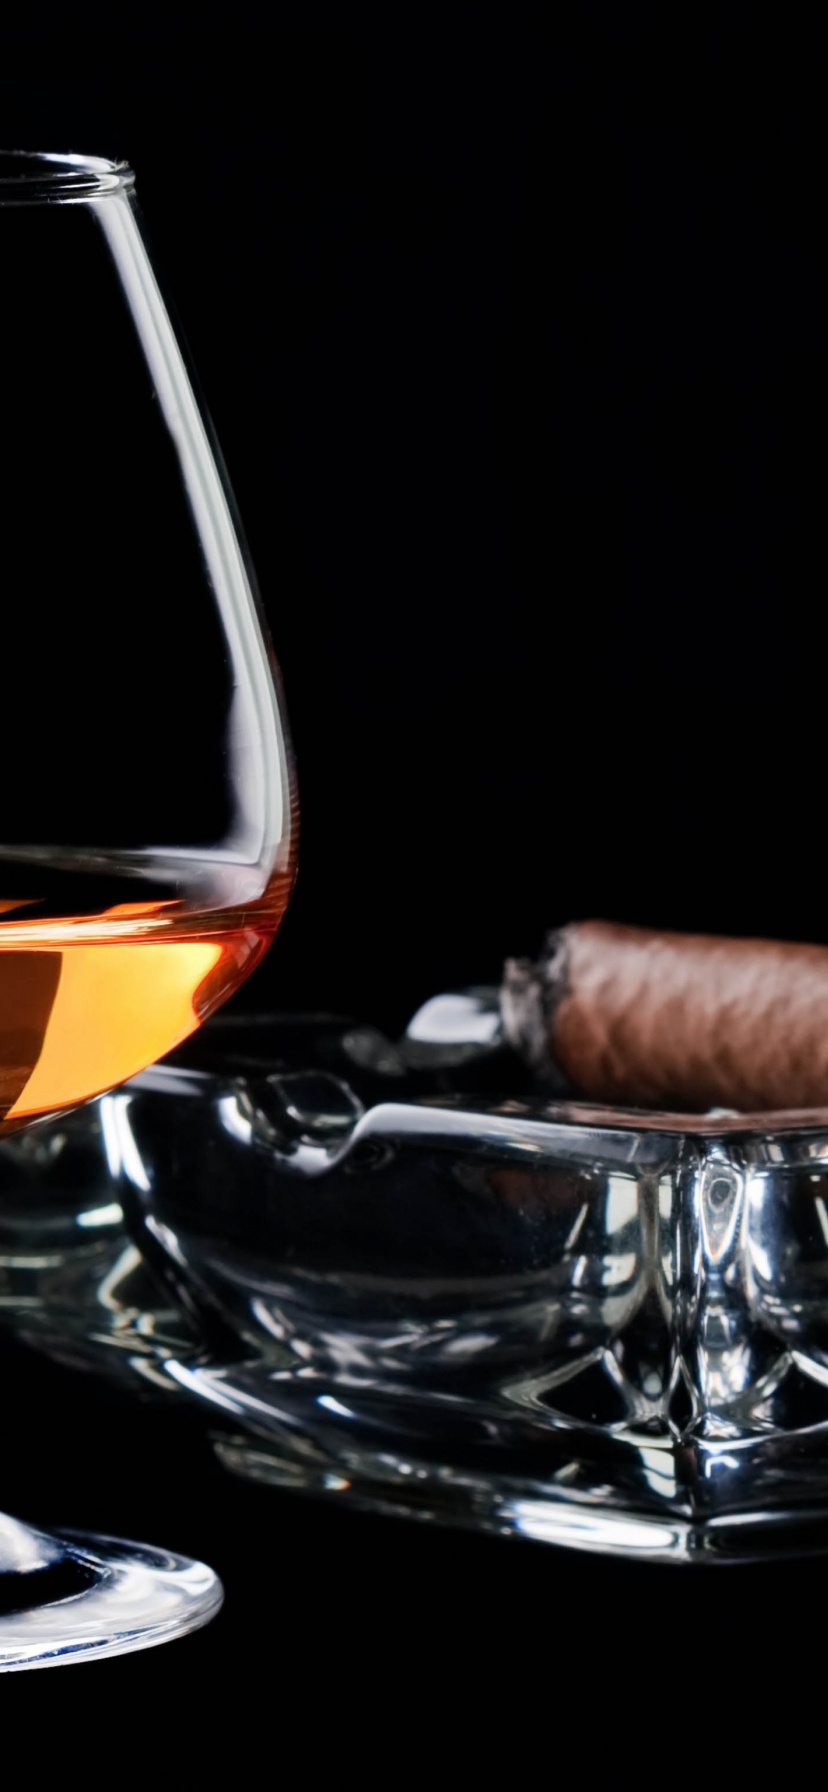 Brandy And Cigar